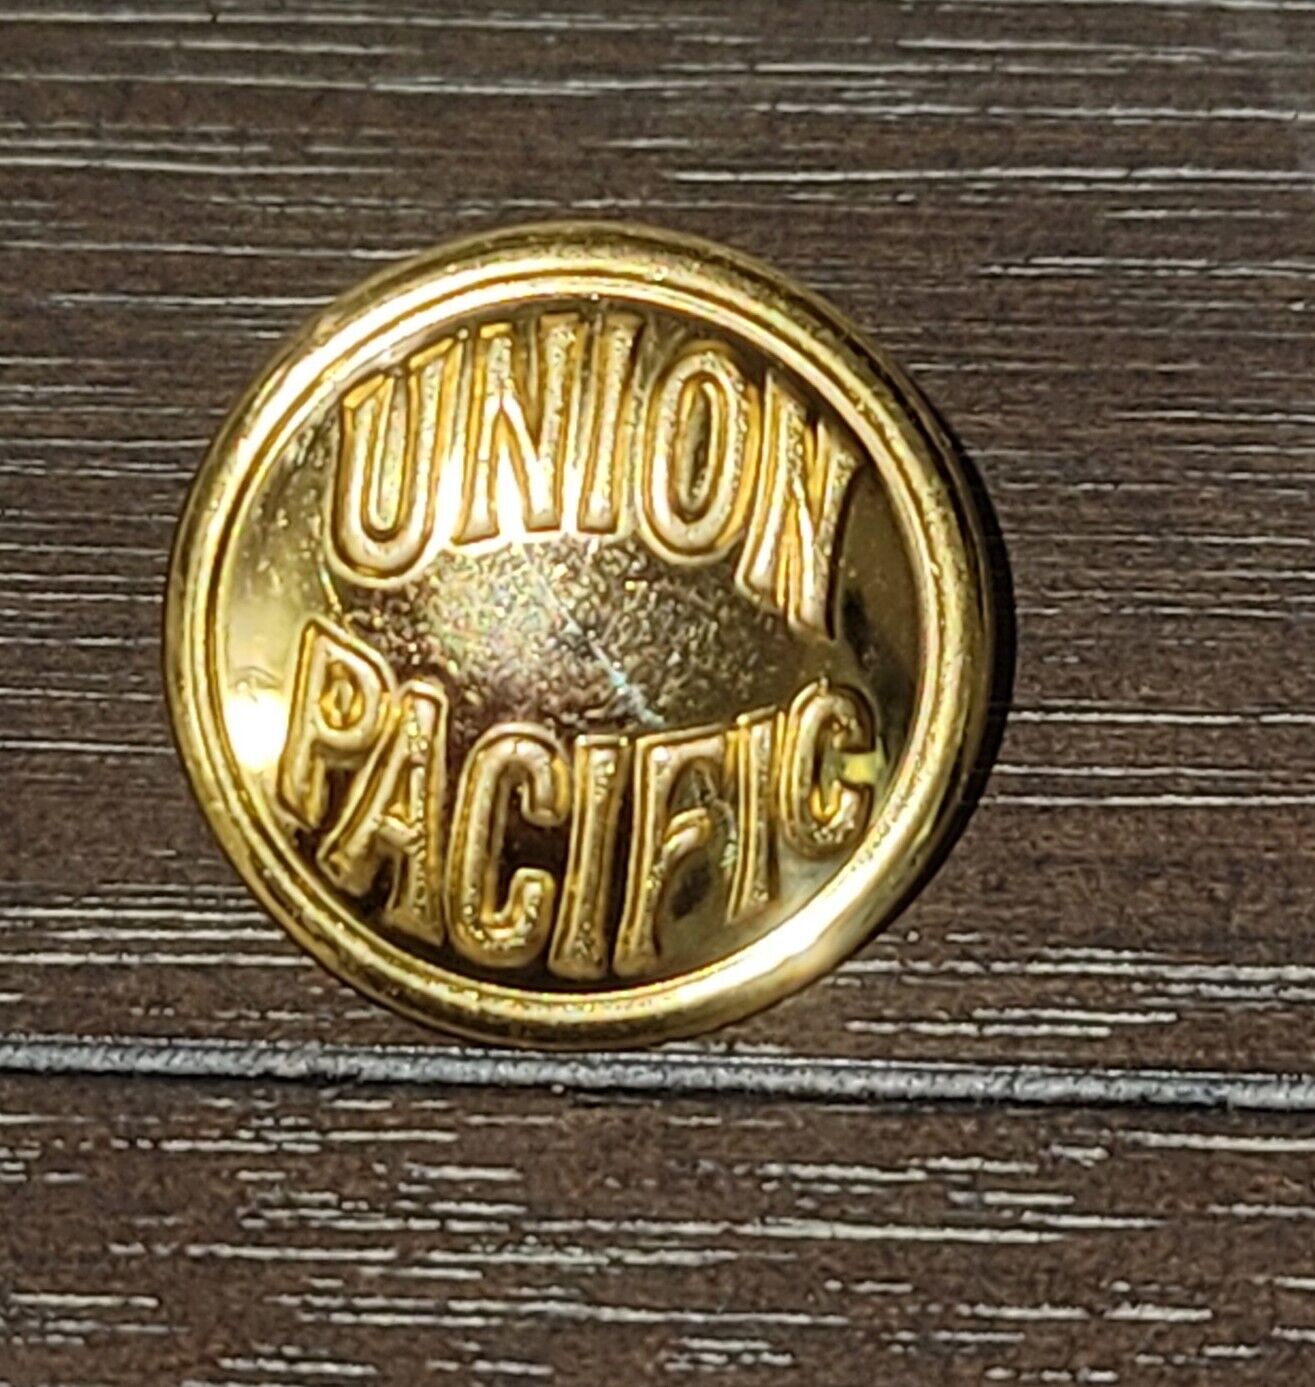 Vintage Union Pacific Railroad Gold Tone Uniform Button Waterbury 1\